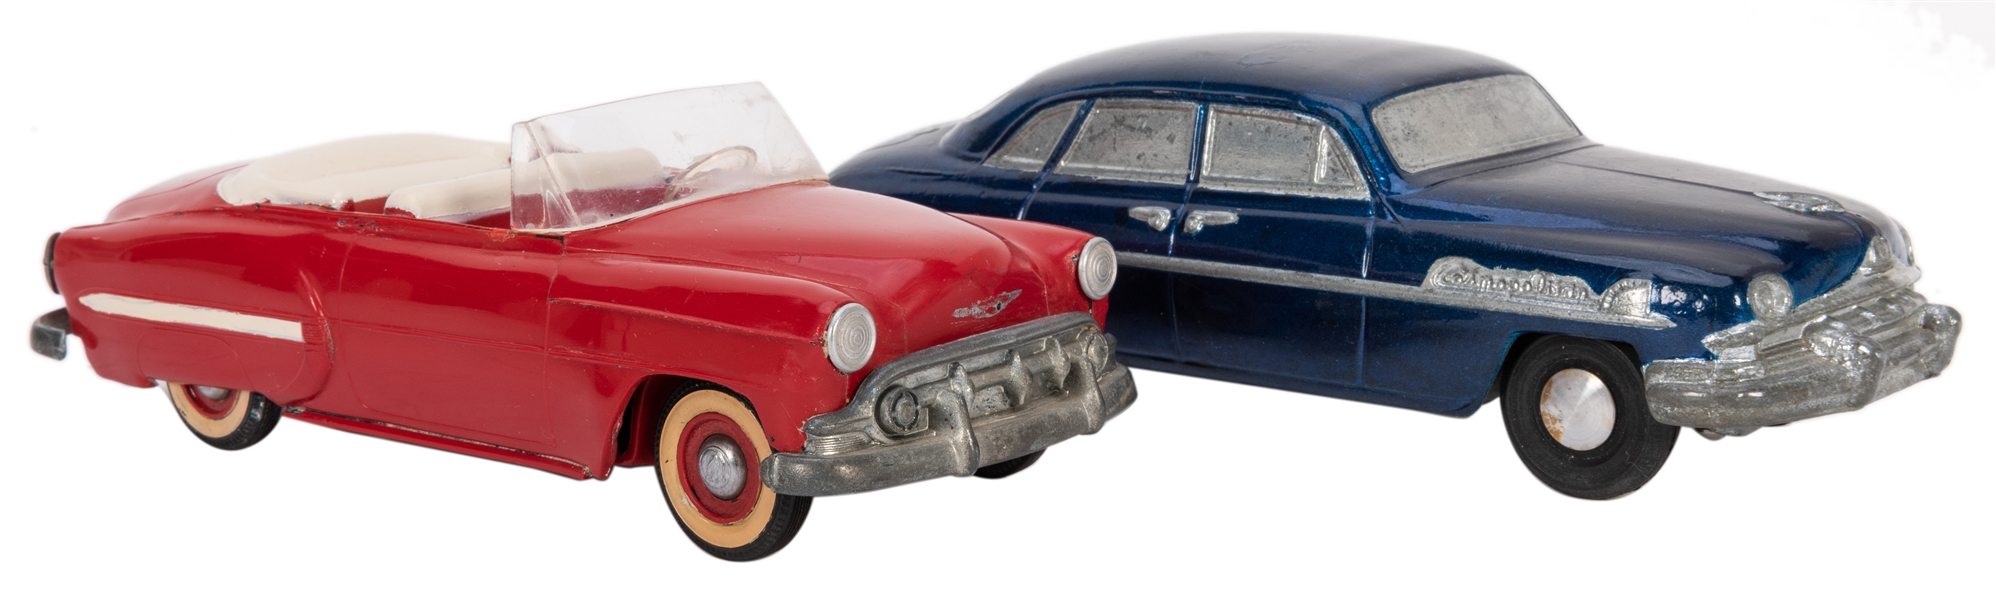  Lot of 2 1950s Promo Car Banks.